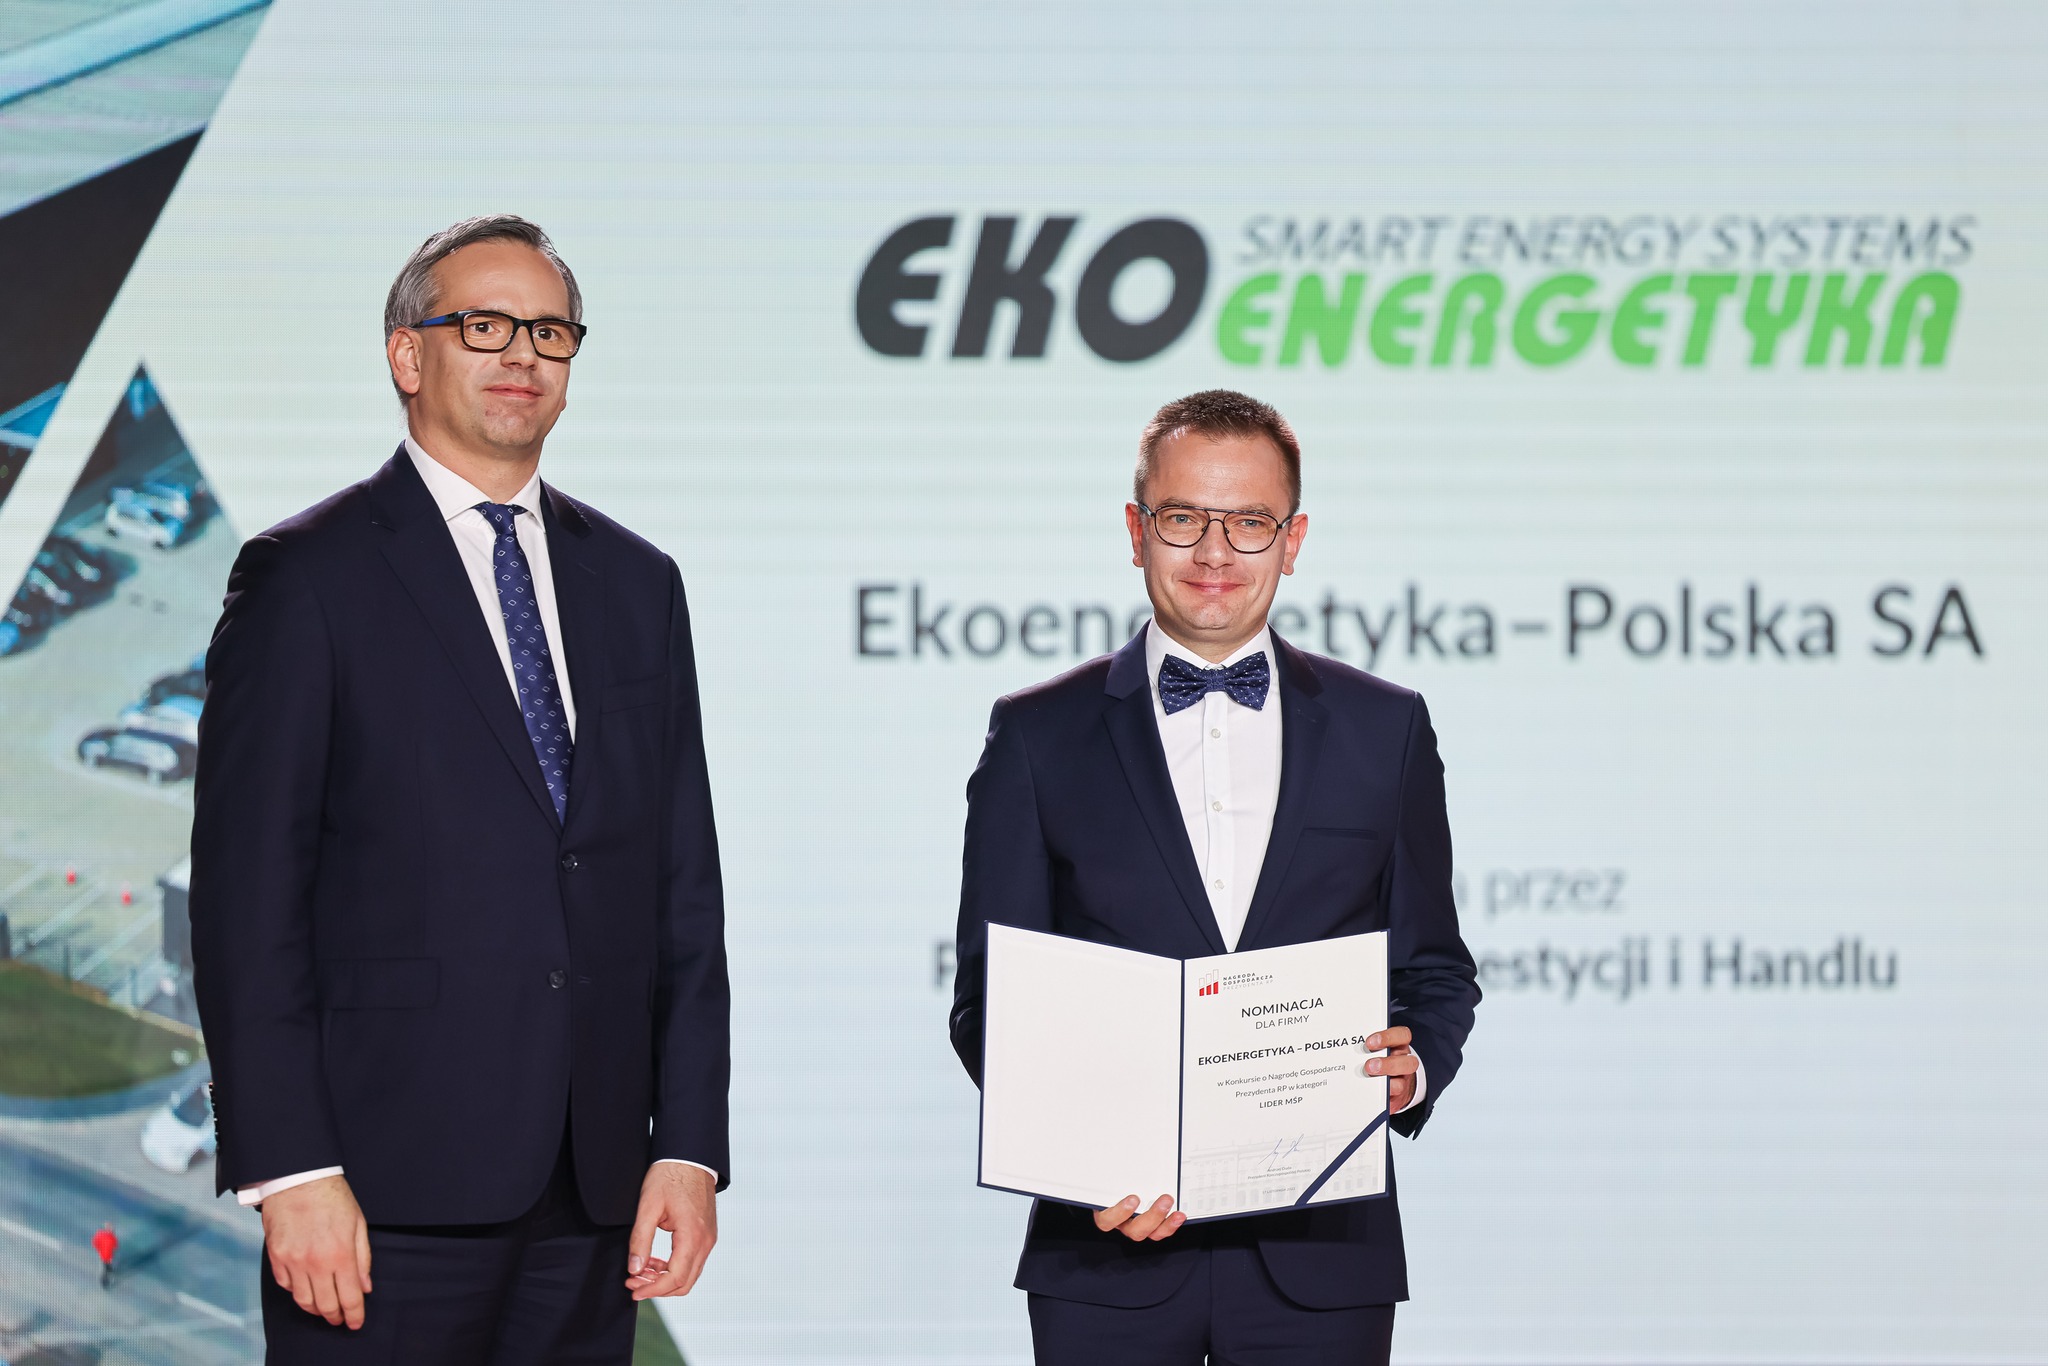 Ekoenergetyka-Polska – Winner of the Presidential Economic Awards